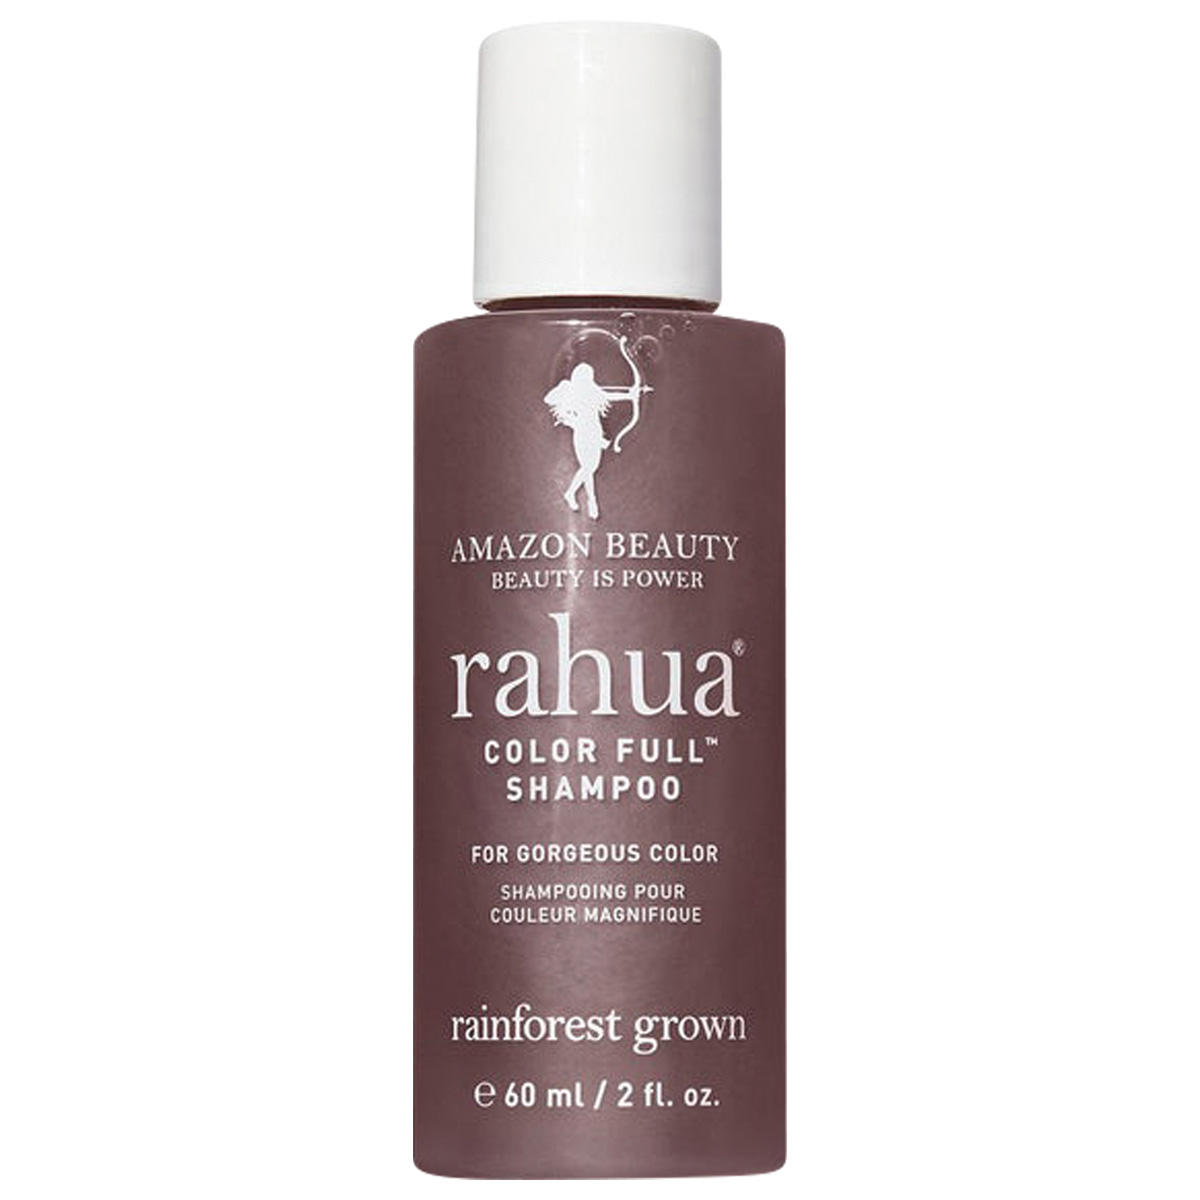 Rahua Color Full Shampoo Travel Size 60 ml - 1